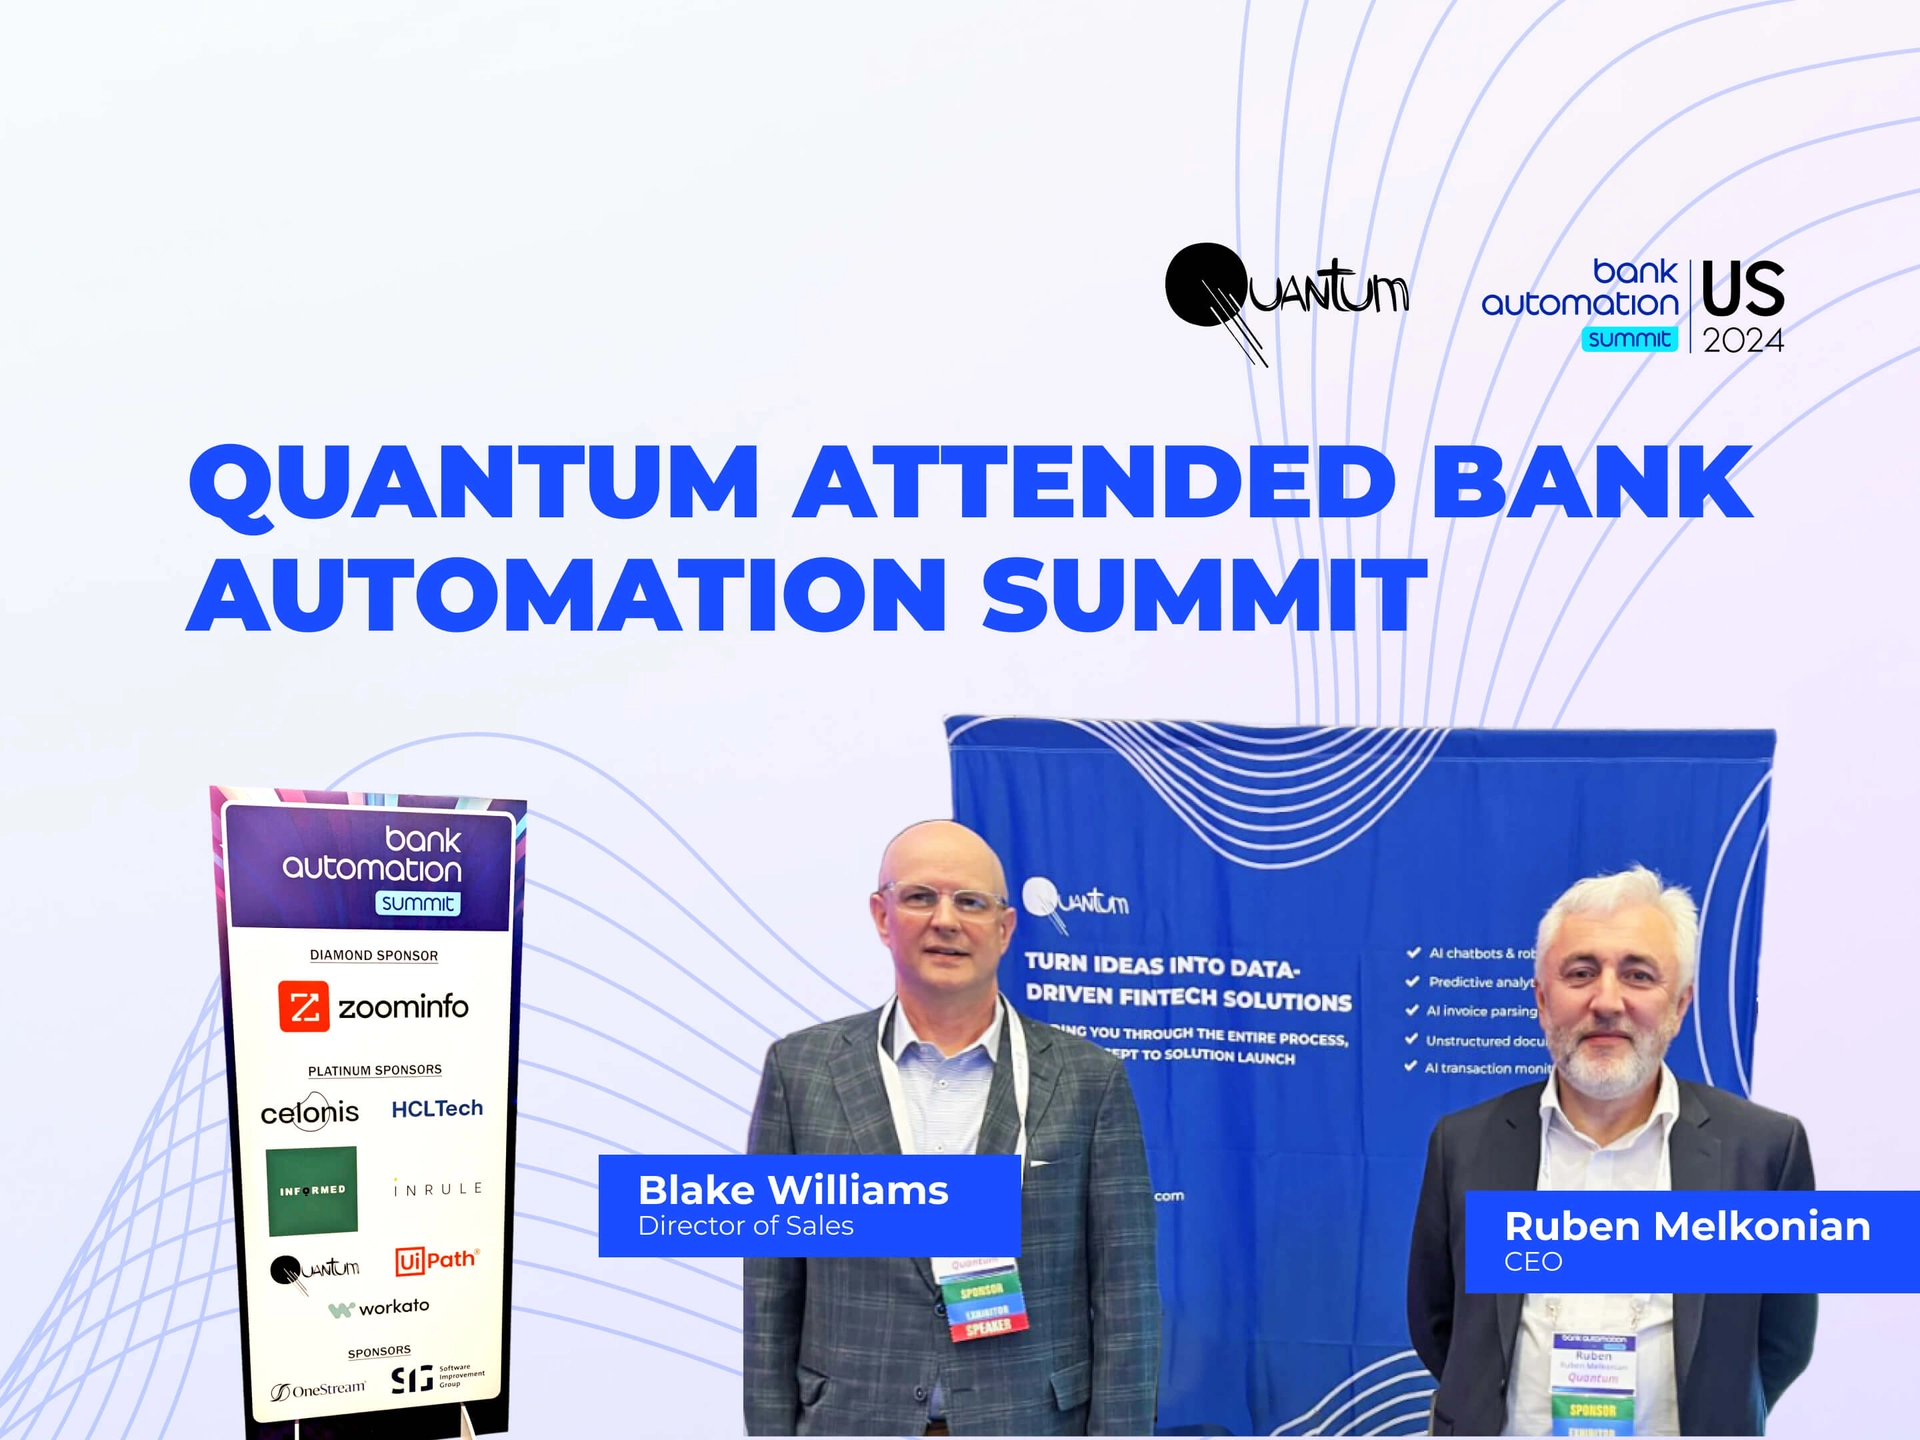 Bank automation summit 2024